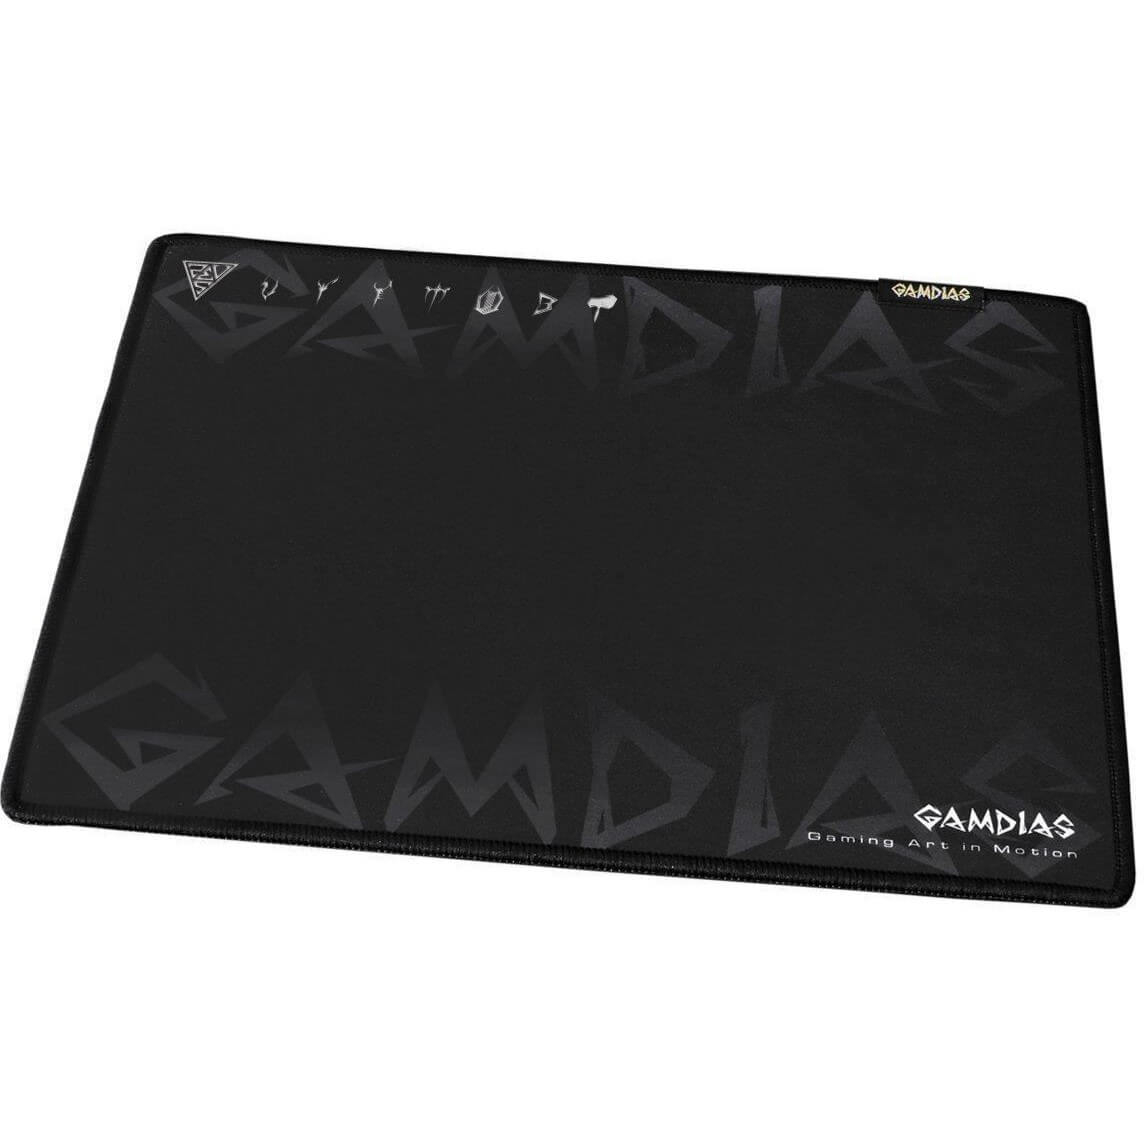  Mousepad gaming Gamdias NYX Speed Medium 